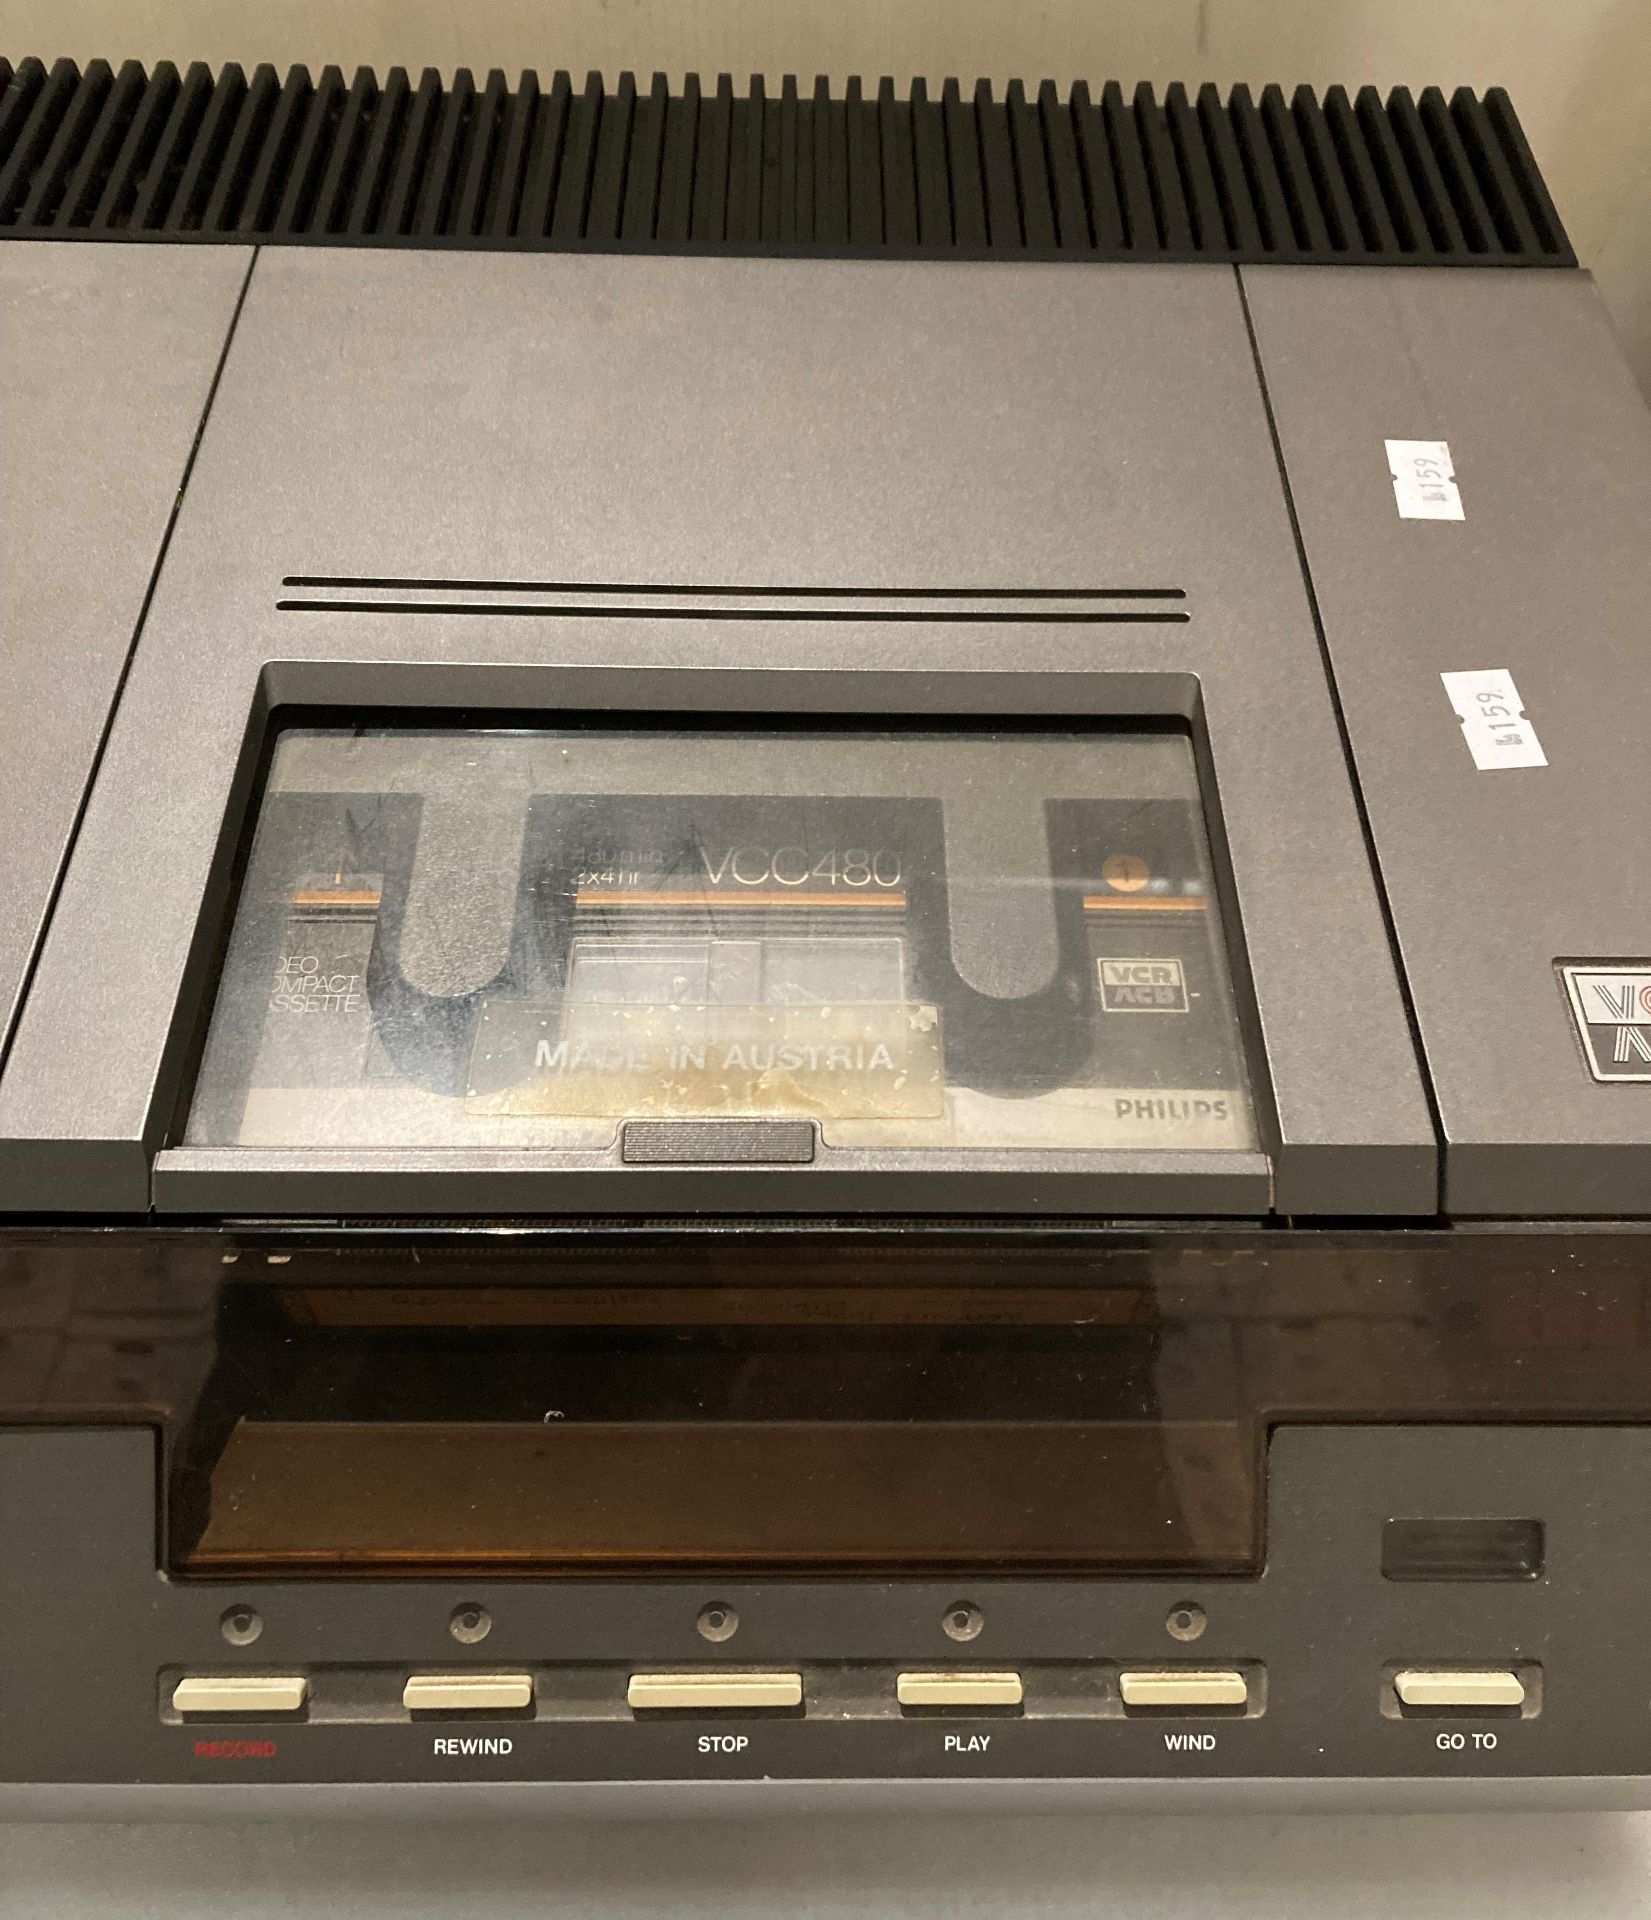 PYE 20VR20 video cassette recorder (no remote, - Image 2 of 3